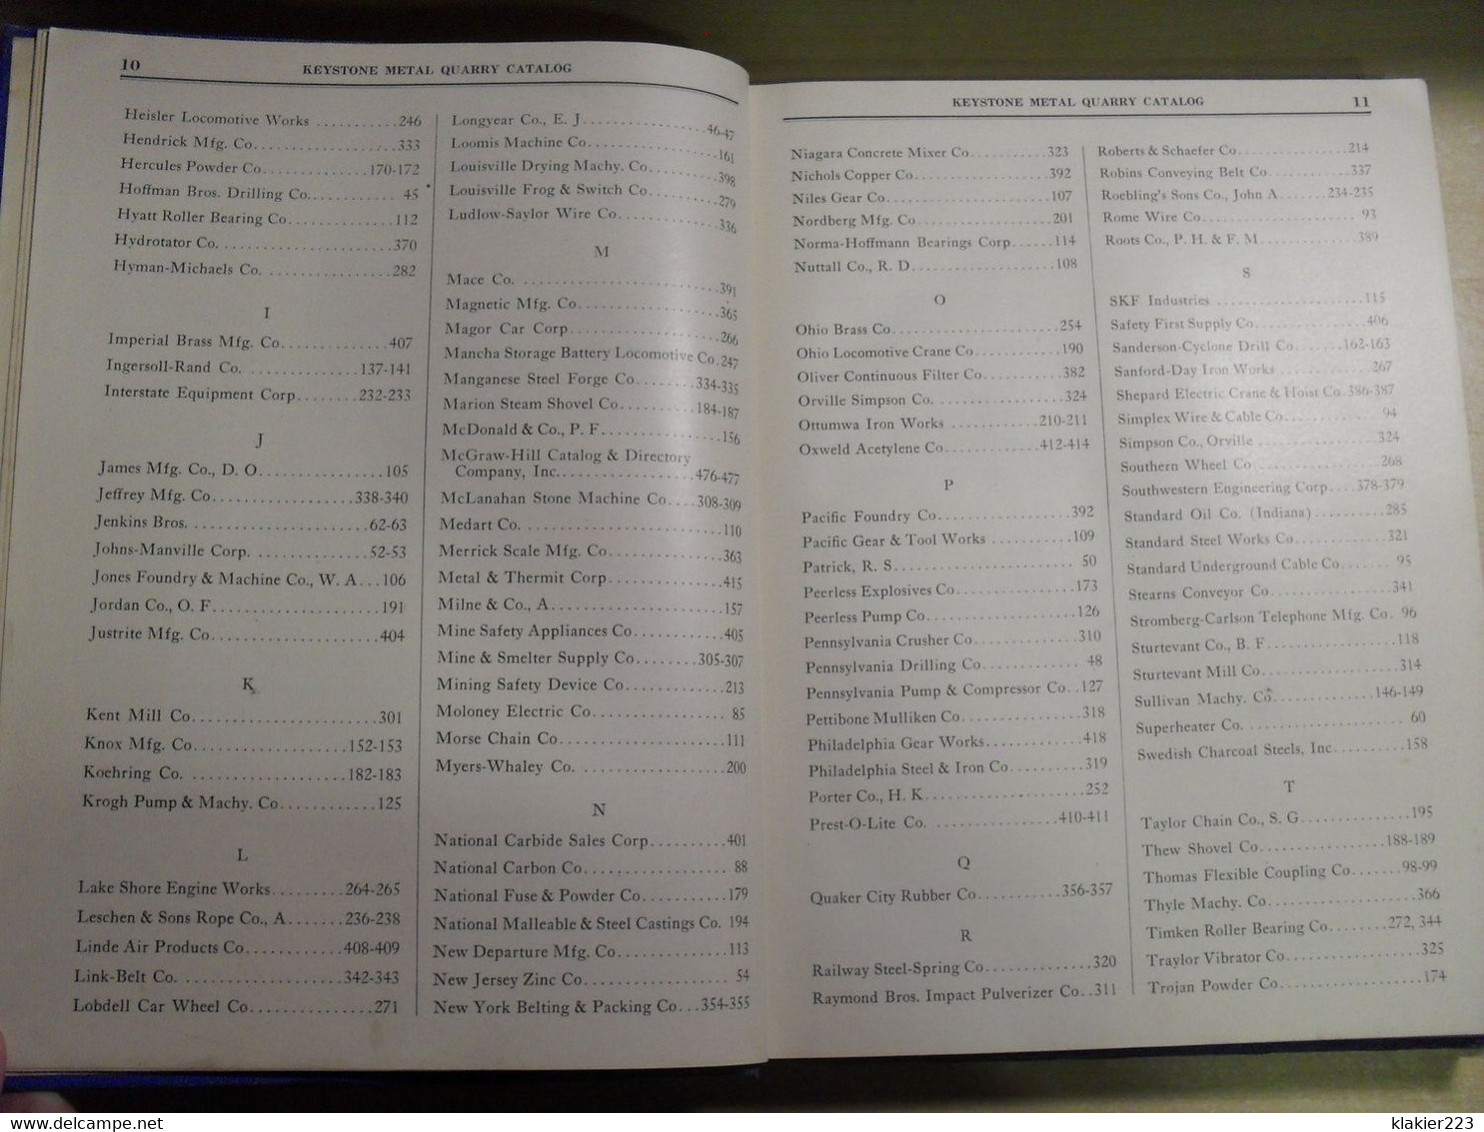 Keystone Metal Quarry Catalog 1928 - Ingeniería